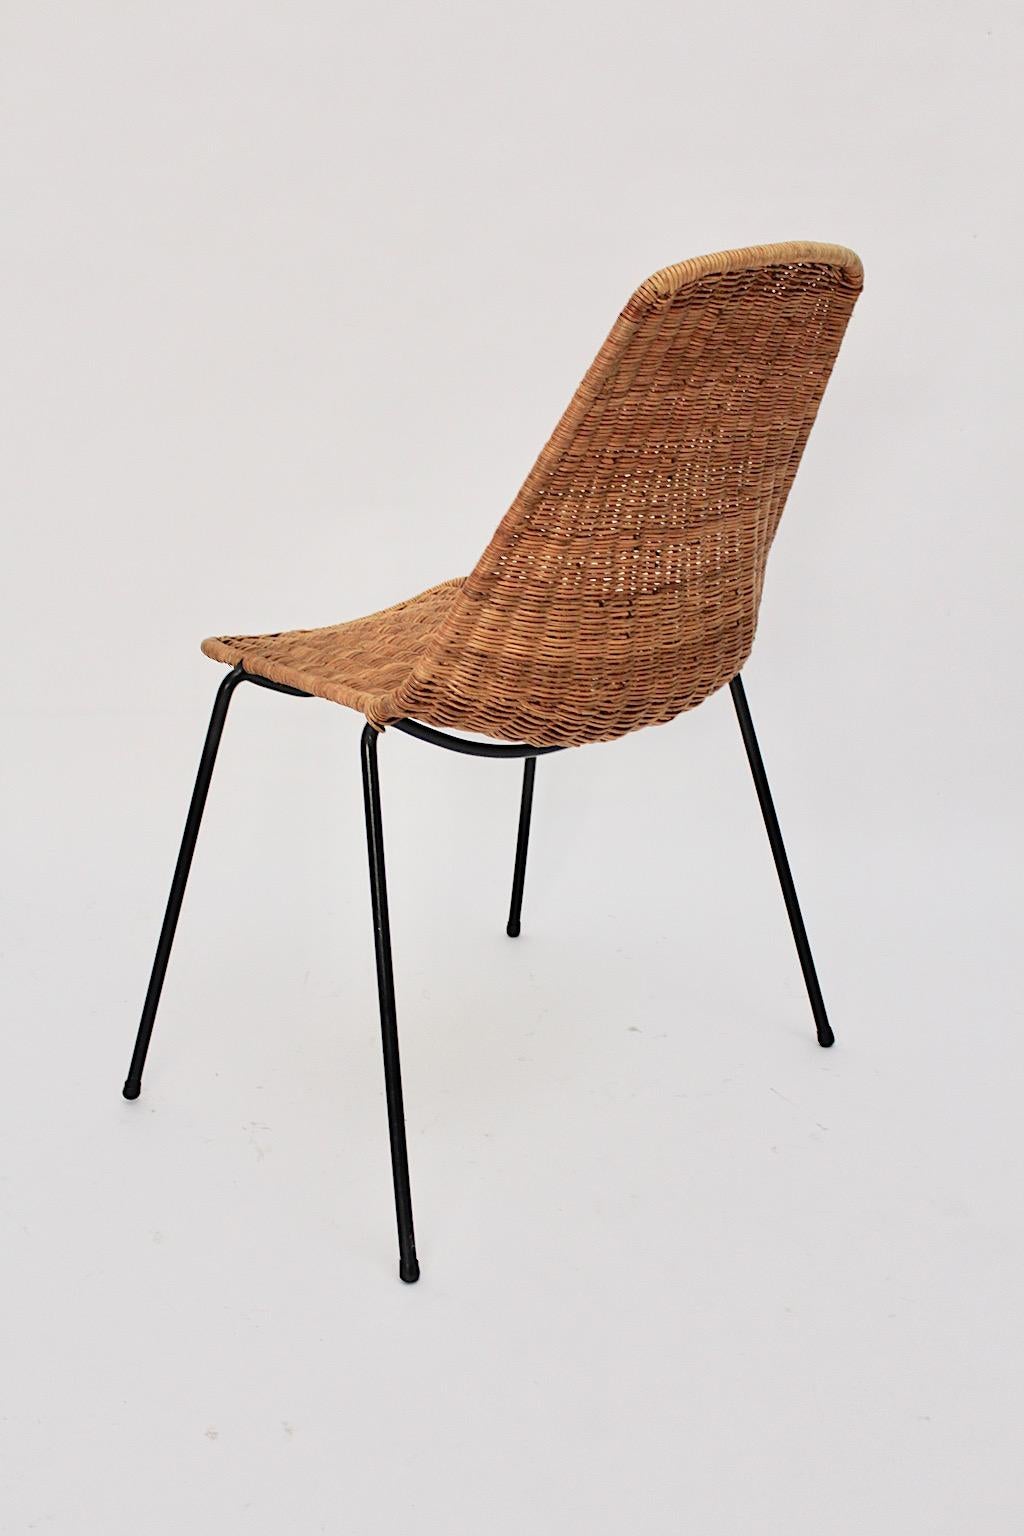 20th Century Gian Franco Legler Vintage Rattan Metal Mid-Century Modern Chair Switzerland